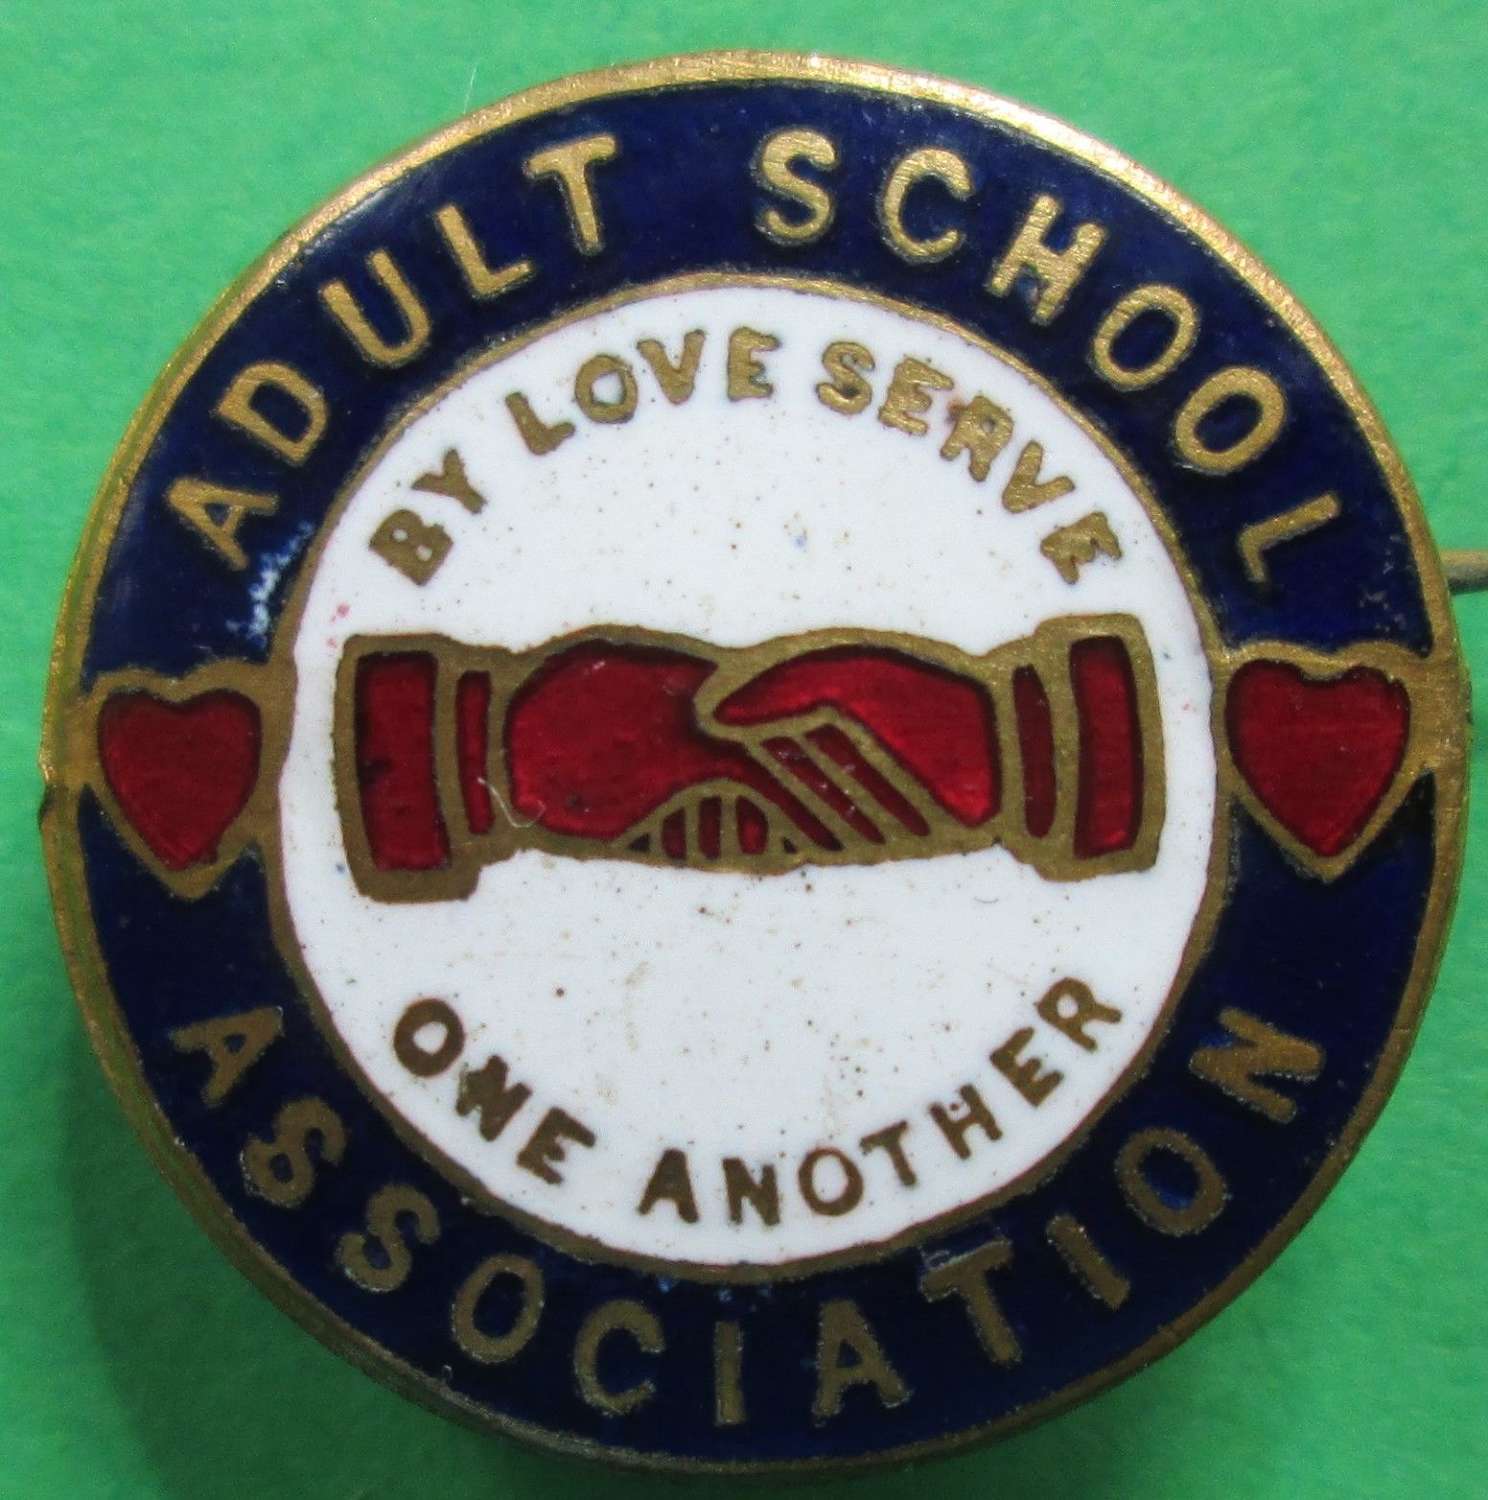 AN ADULT SCHOOL ASSOCIATION BADGE